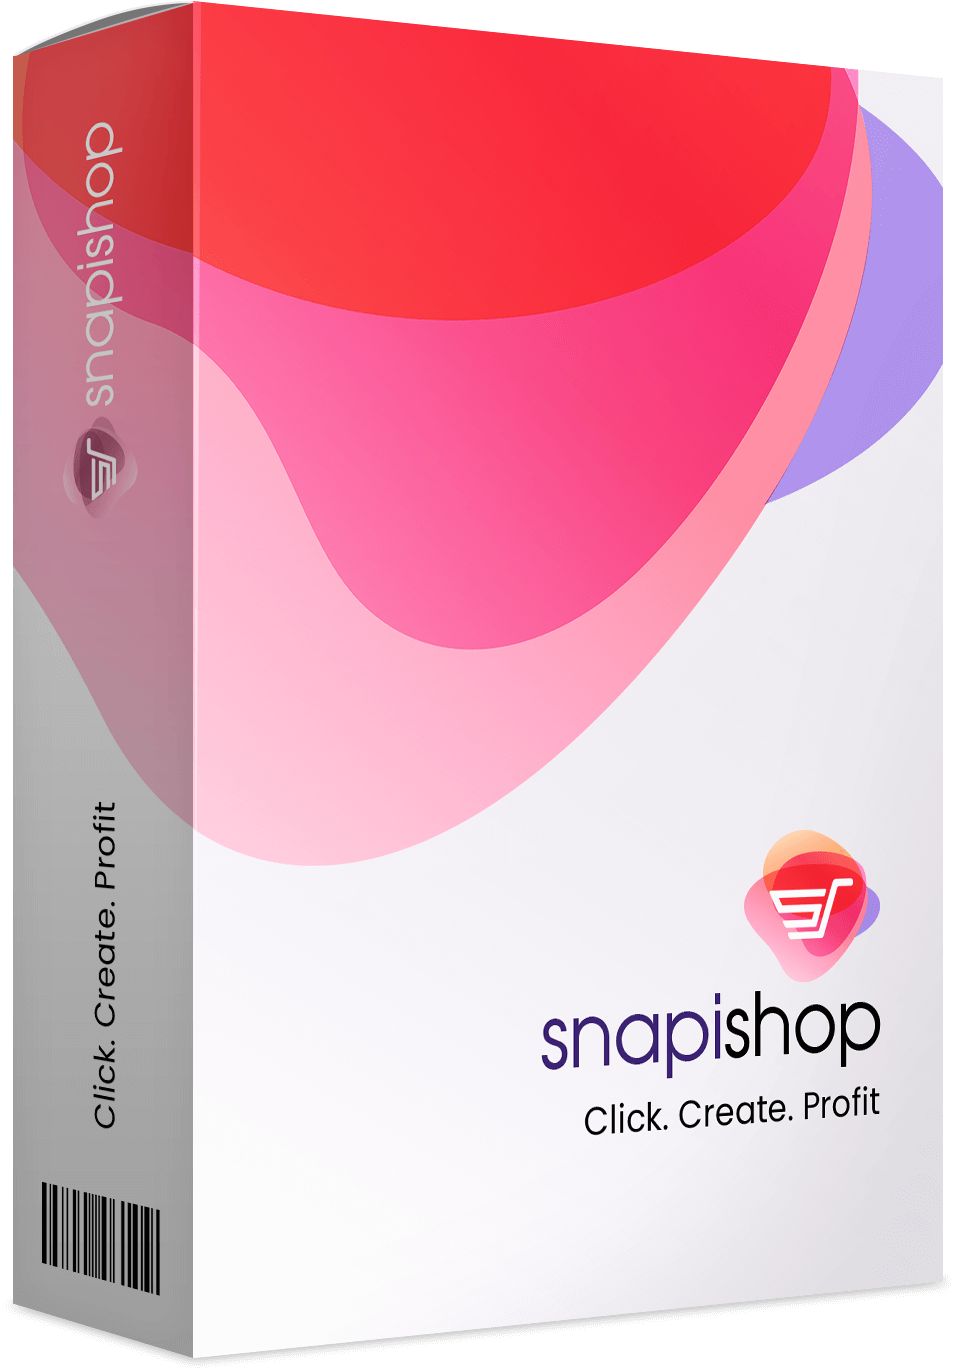 Snapishop-Review